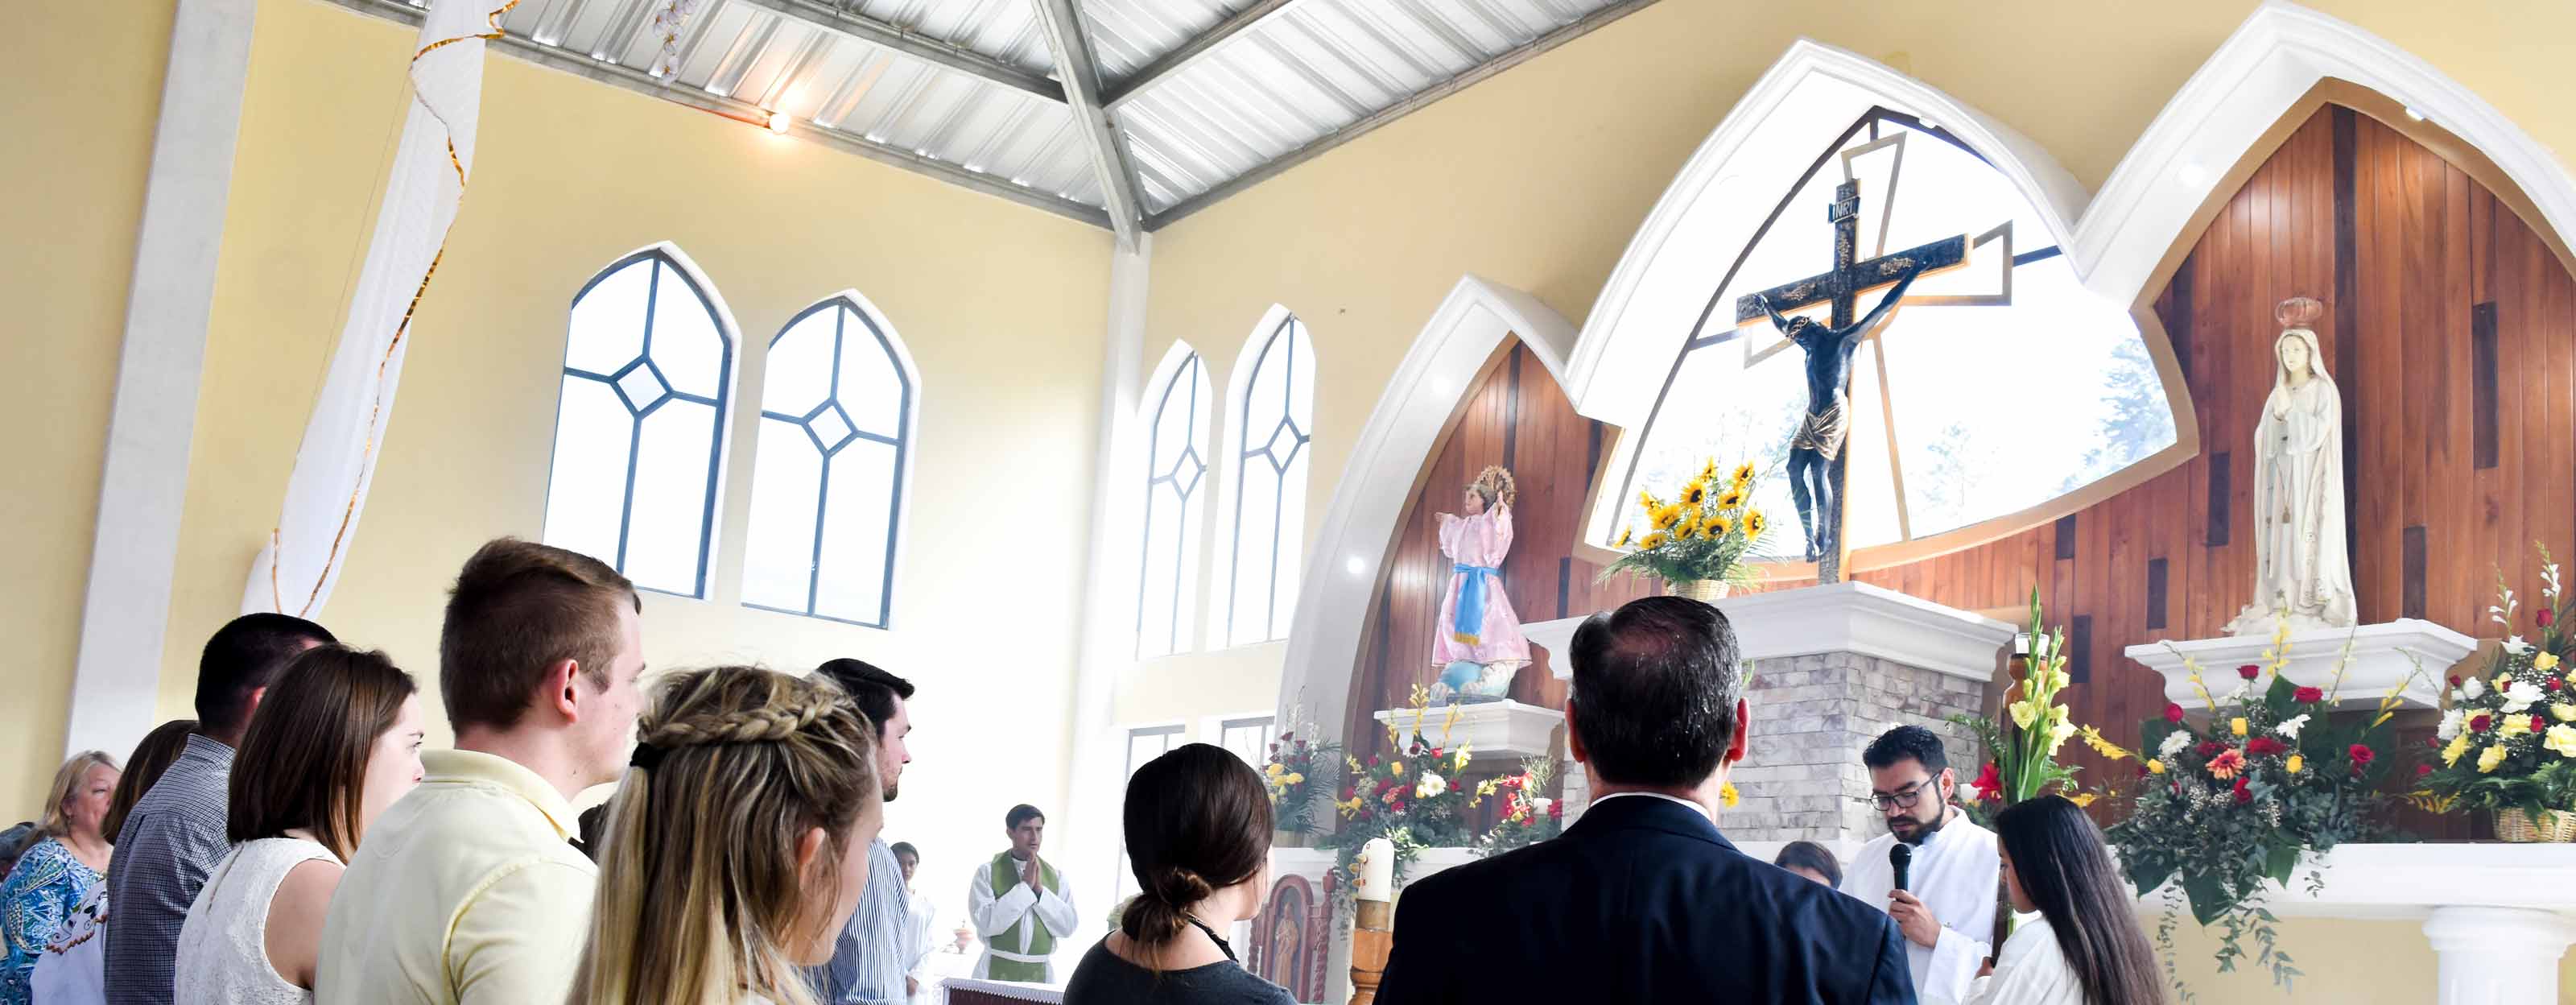 Mass at a church in Joya de Los Cedros, Guatemala